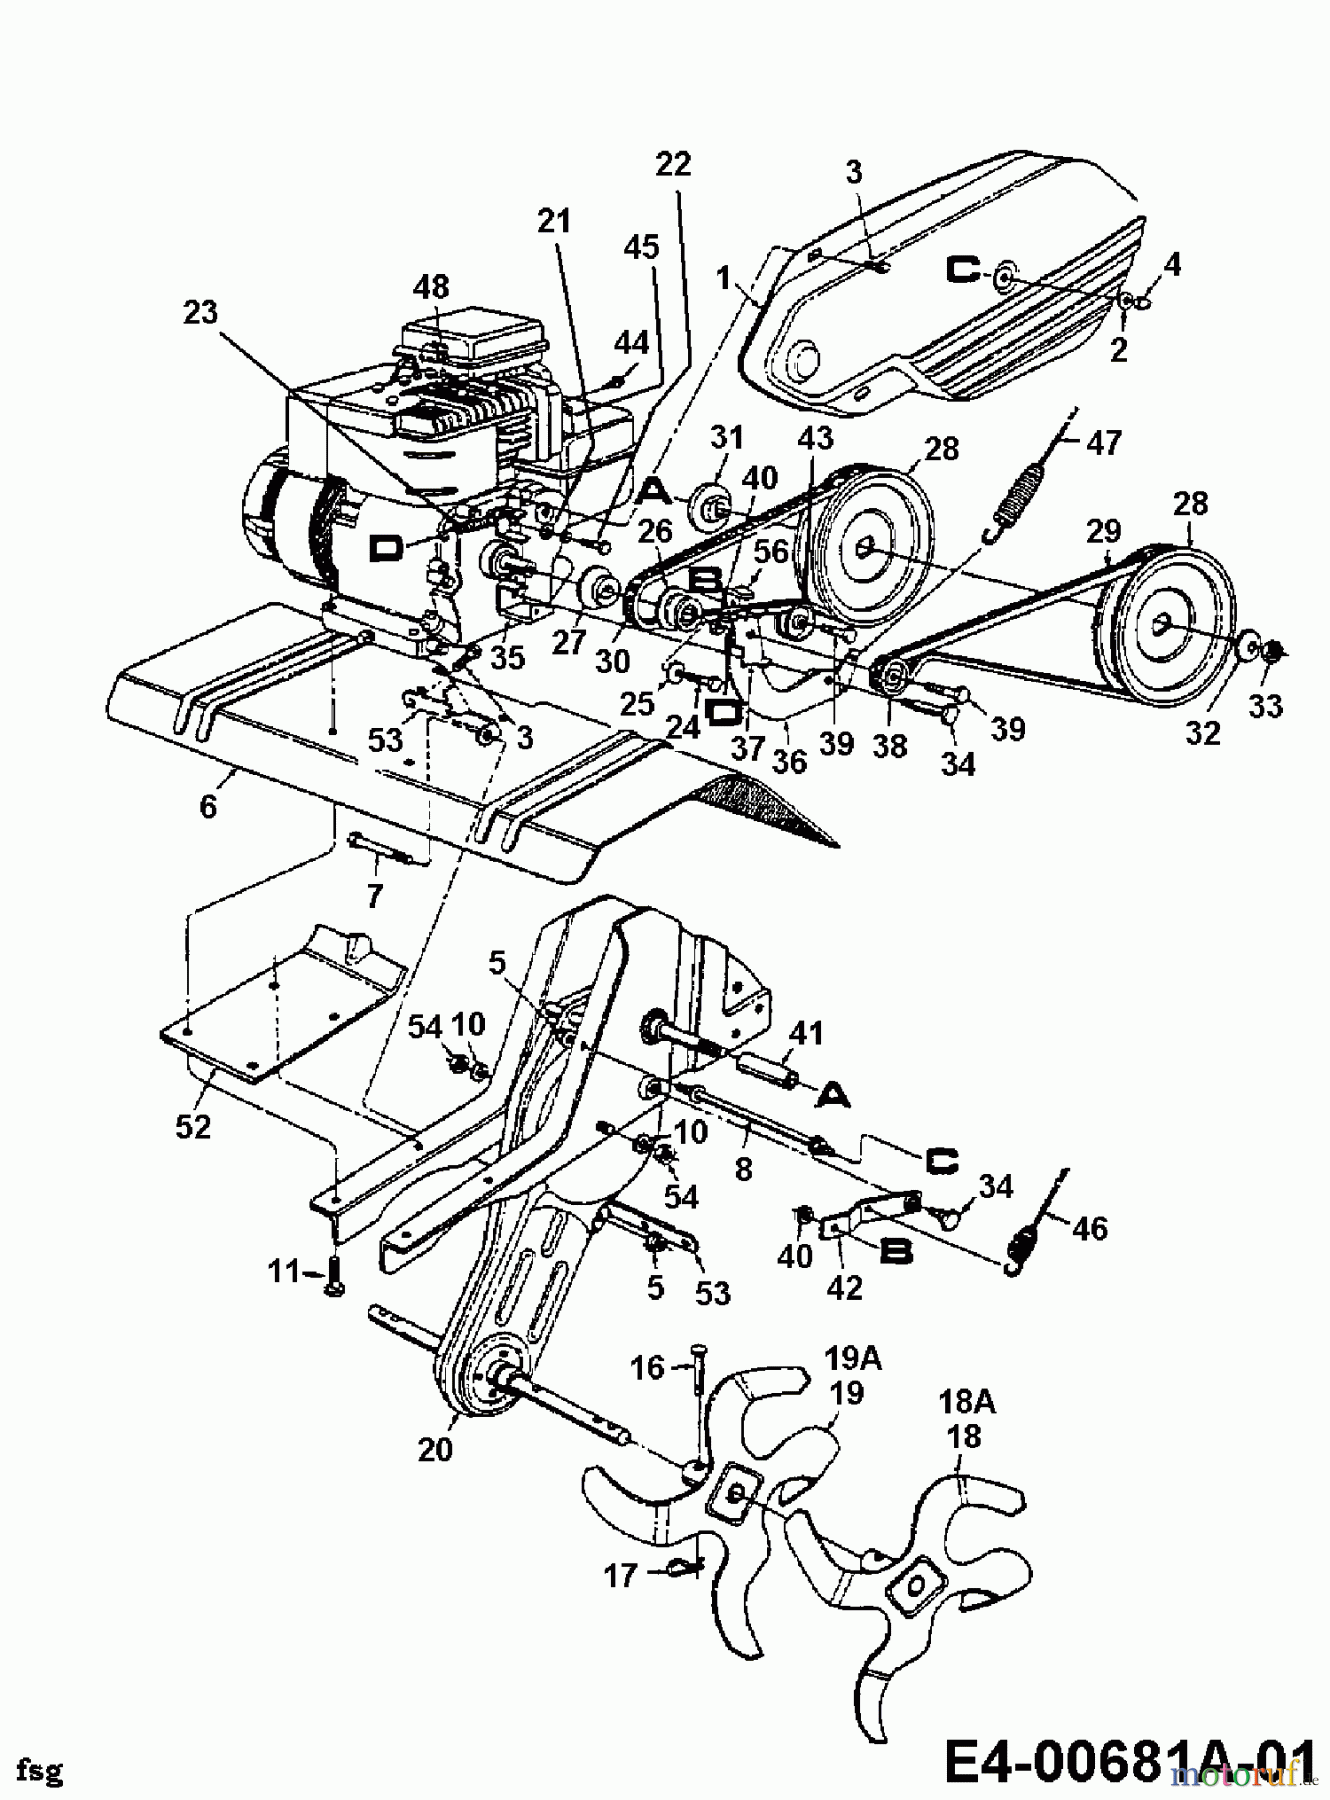  Yard-Man Motorhacken FTR 500 YM 21A-390-643  (1998) Getriebe, Hacksterne